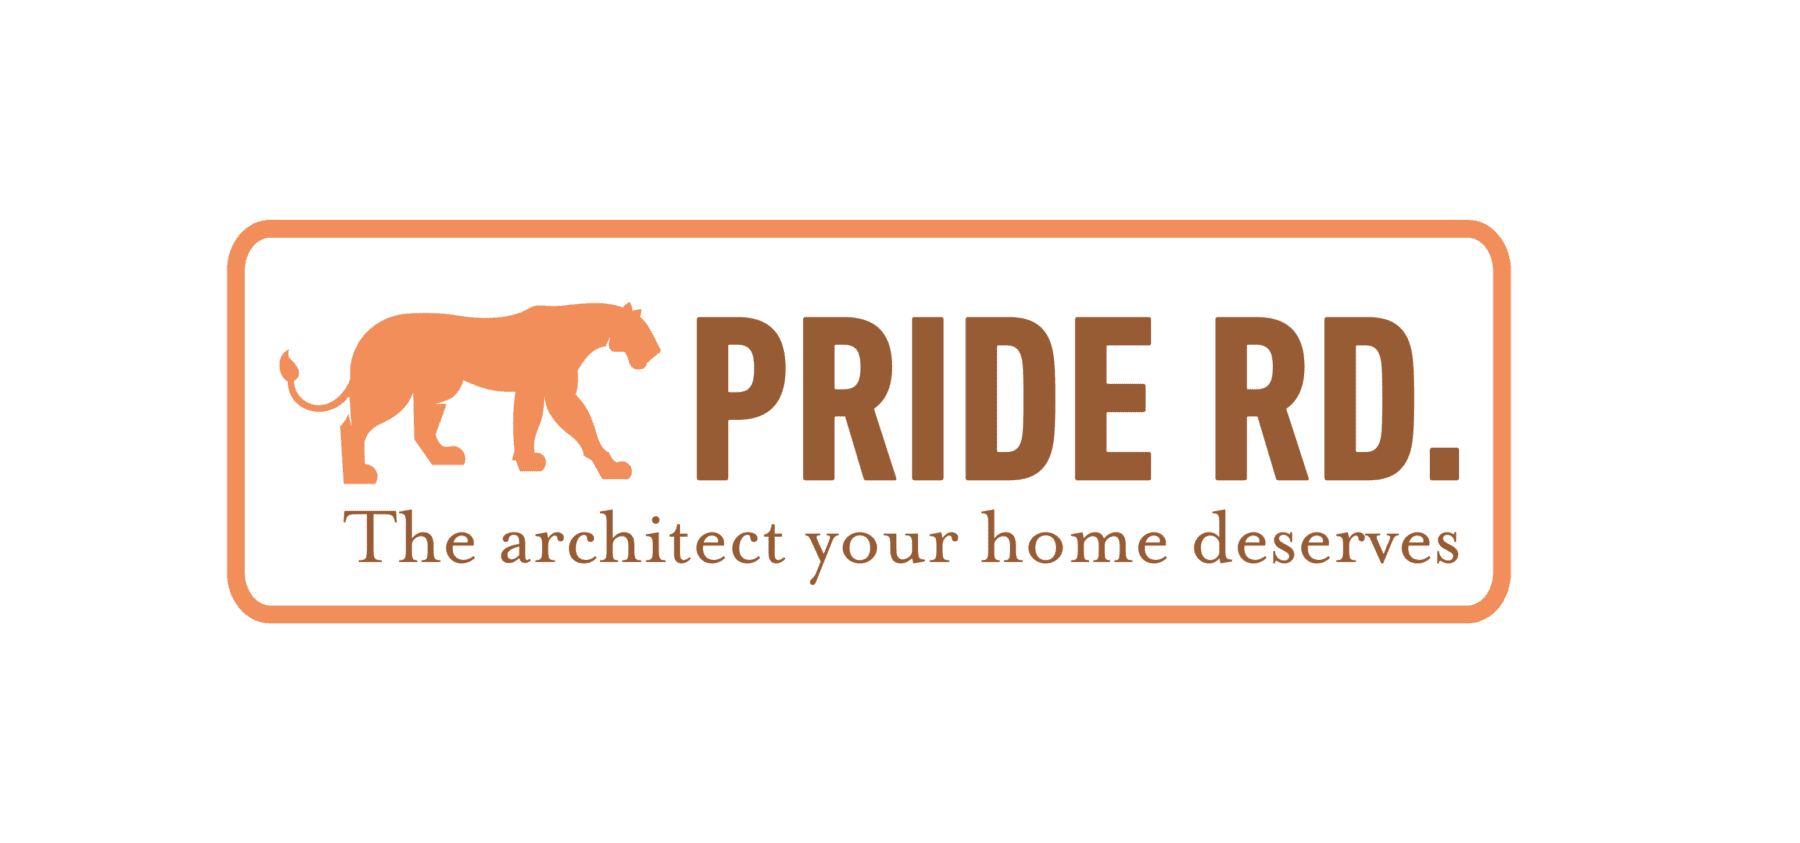 Pride Road Architects